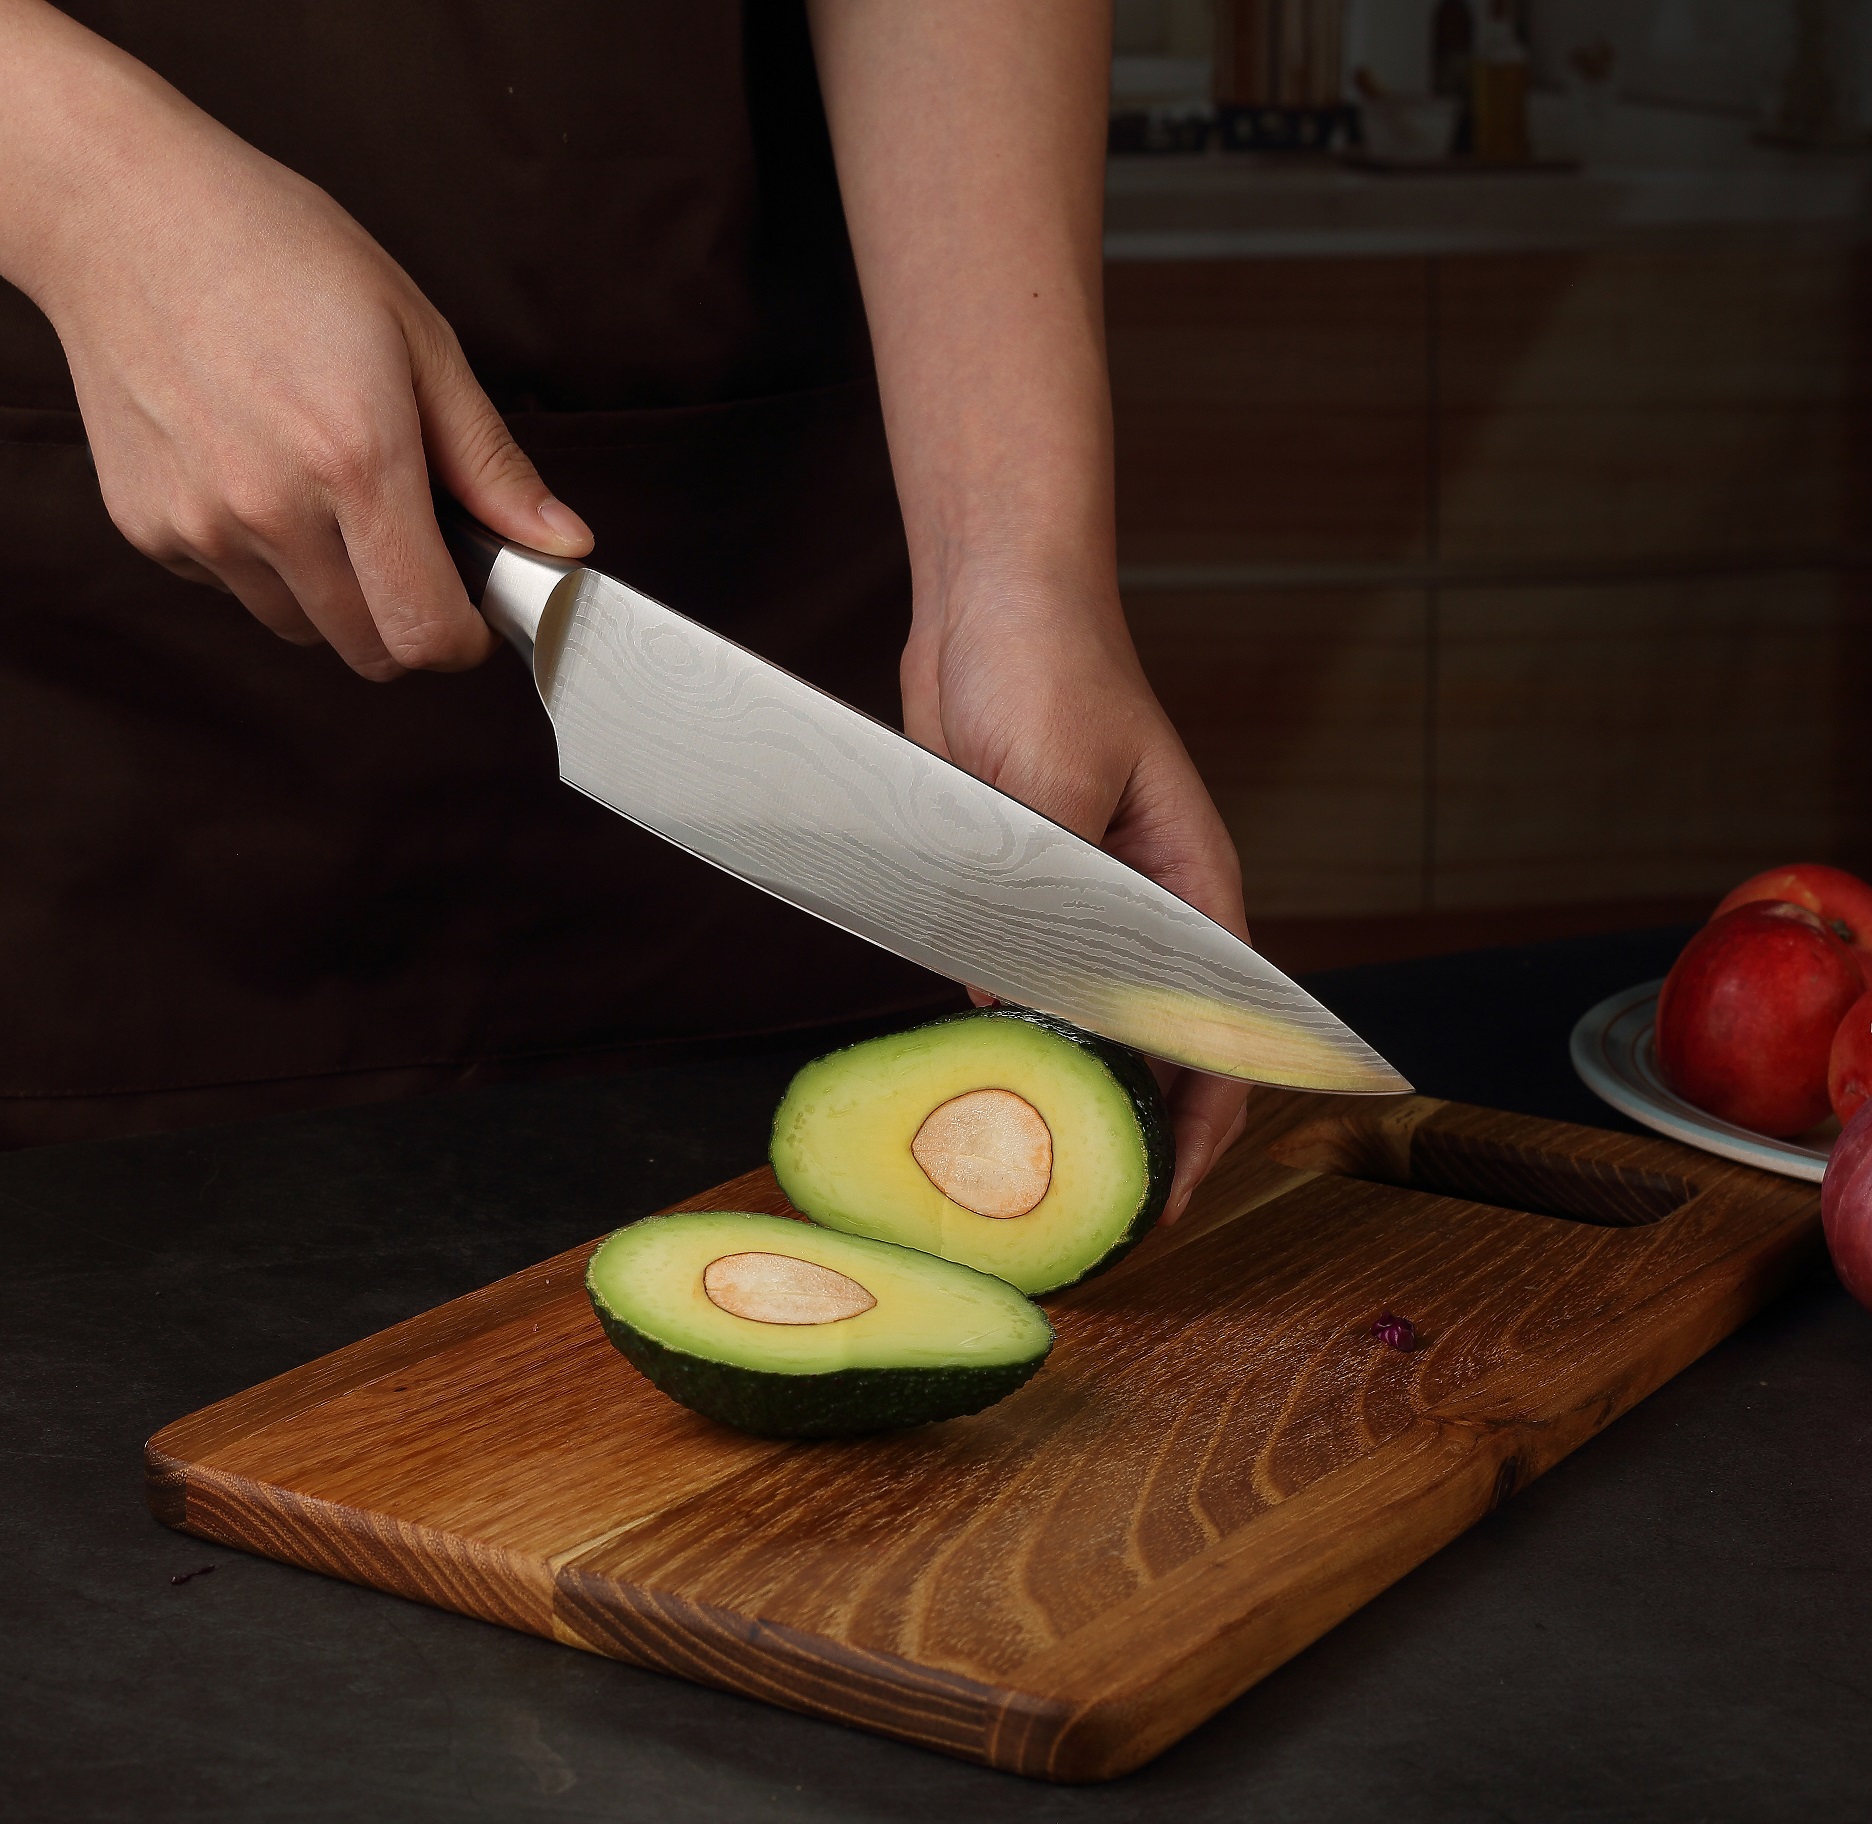 Universal Chef Knife 20 cm